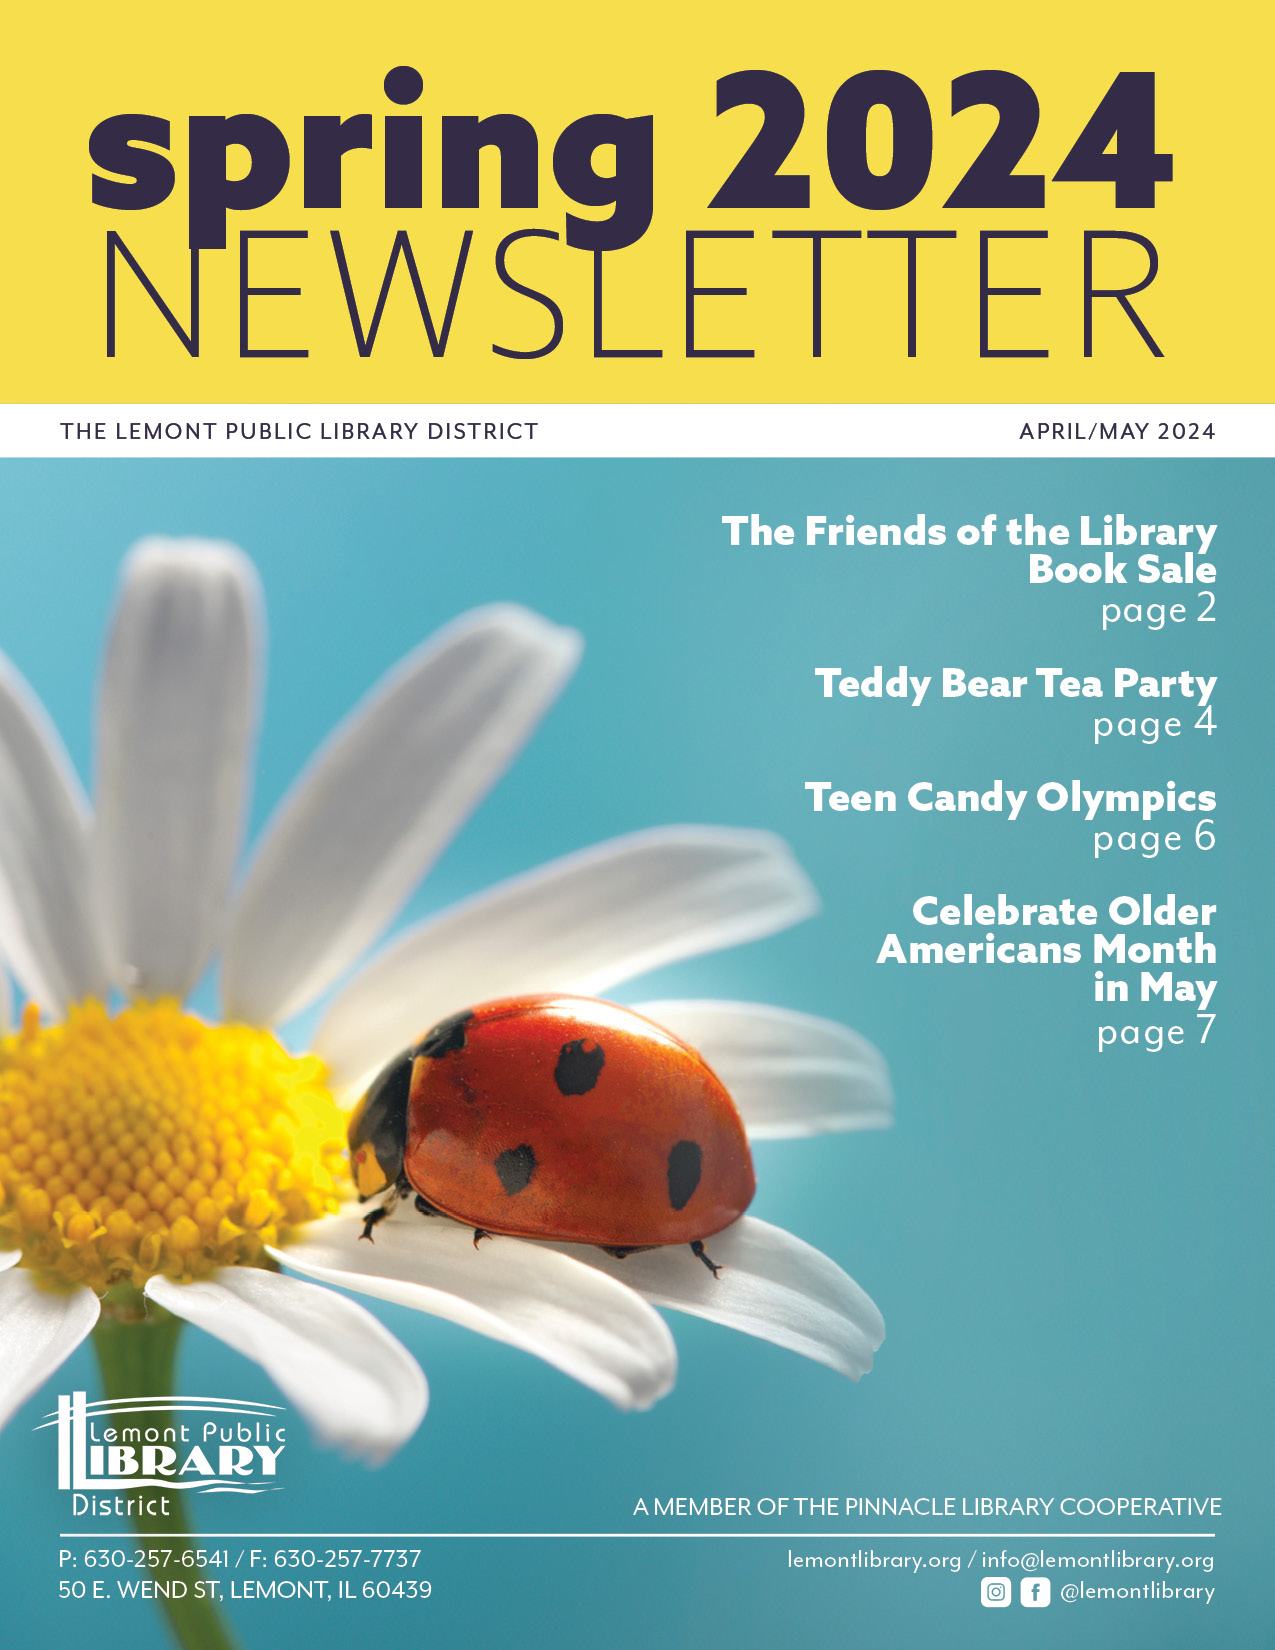 Cover image for Spring 2024 newsletter, ladybug on flower